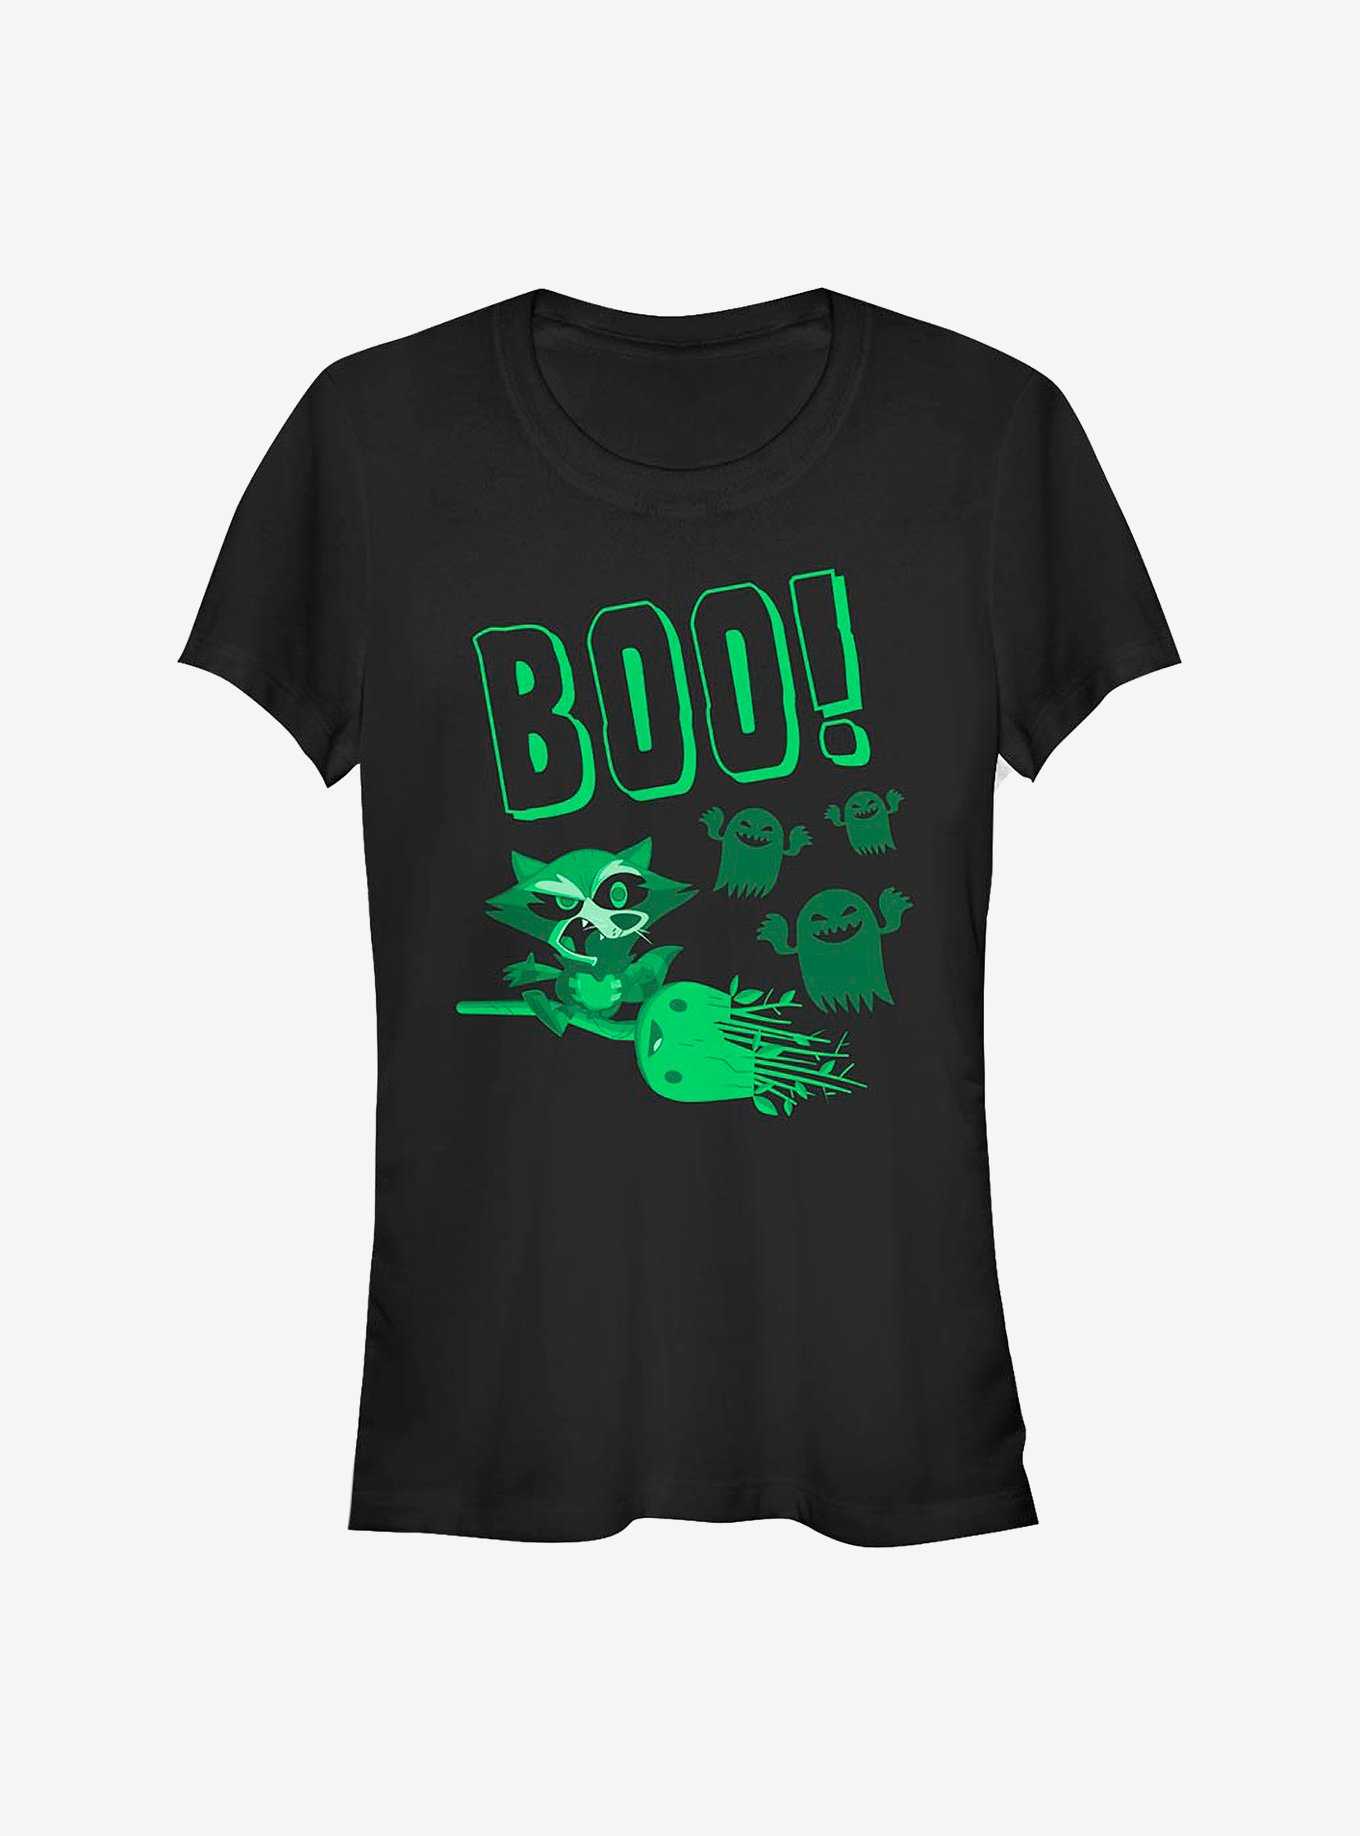 Marvel Guardians of The Galaxy Boo Rocket Girls T-Shirt, , hi-res